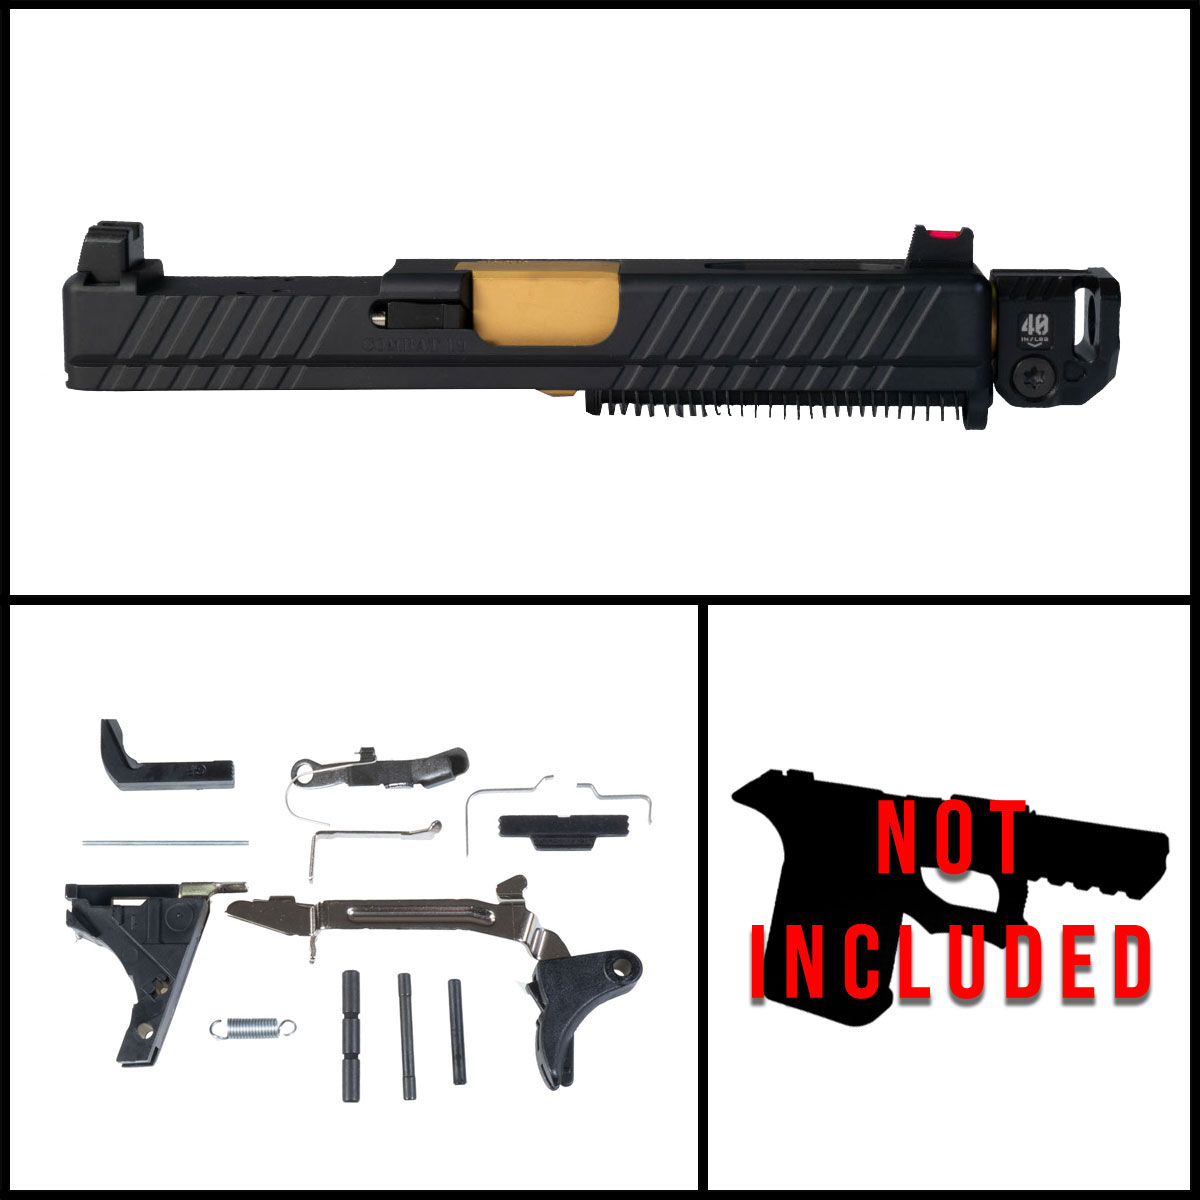 DTT 'Pugna w/ Strike Industries Compensator' 9mm Full Pistol Build Kit (Everything Minus Frame) - Glock 19 Gen 1-3 Compatible